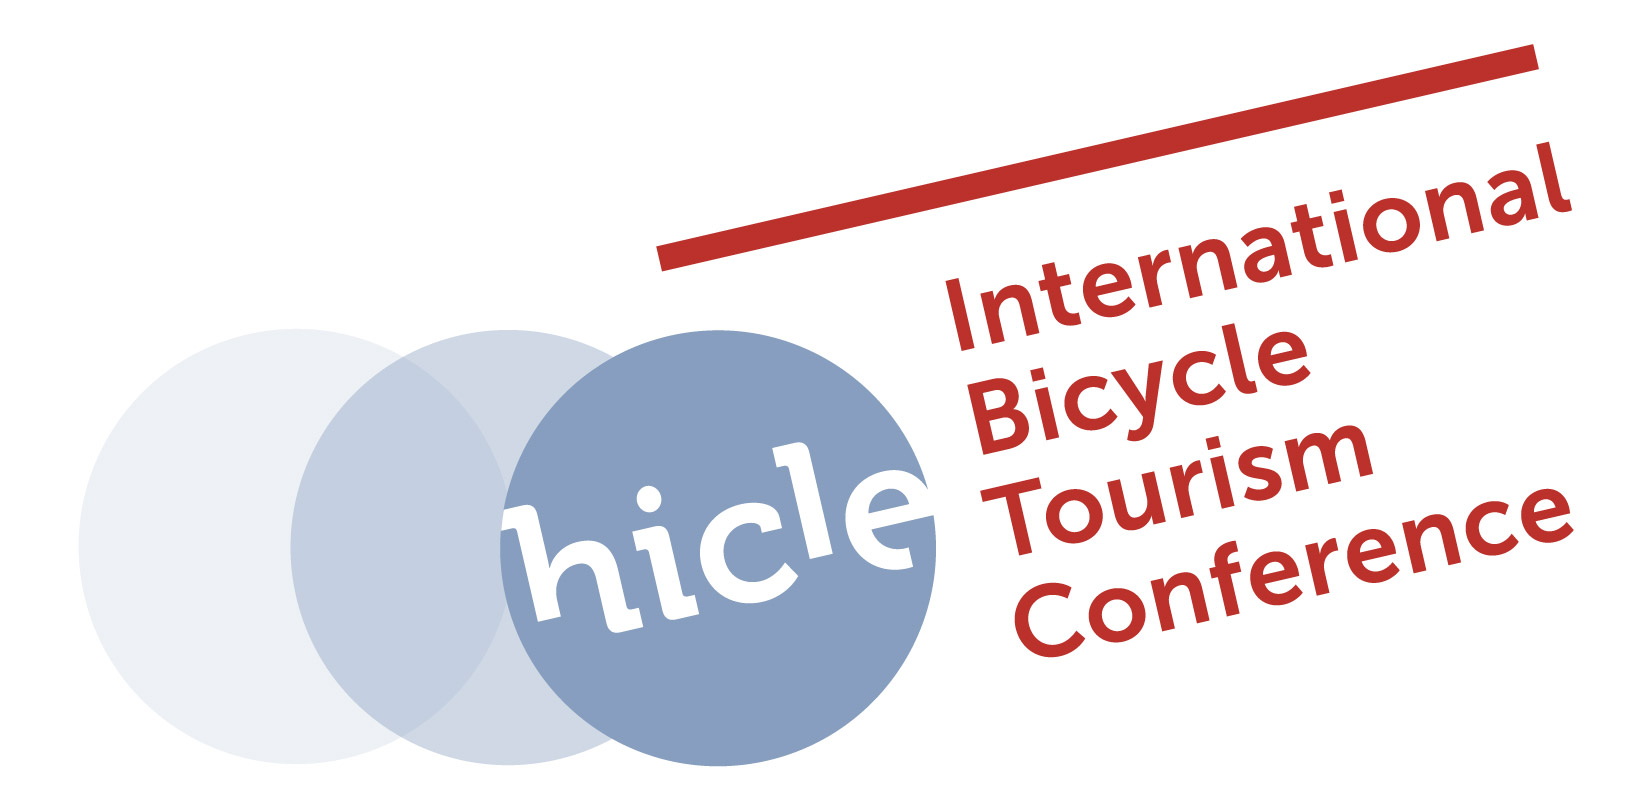 fietstoerisme conferentie logo ibtc